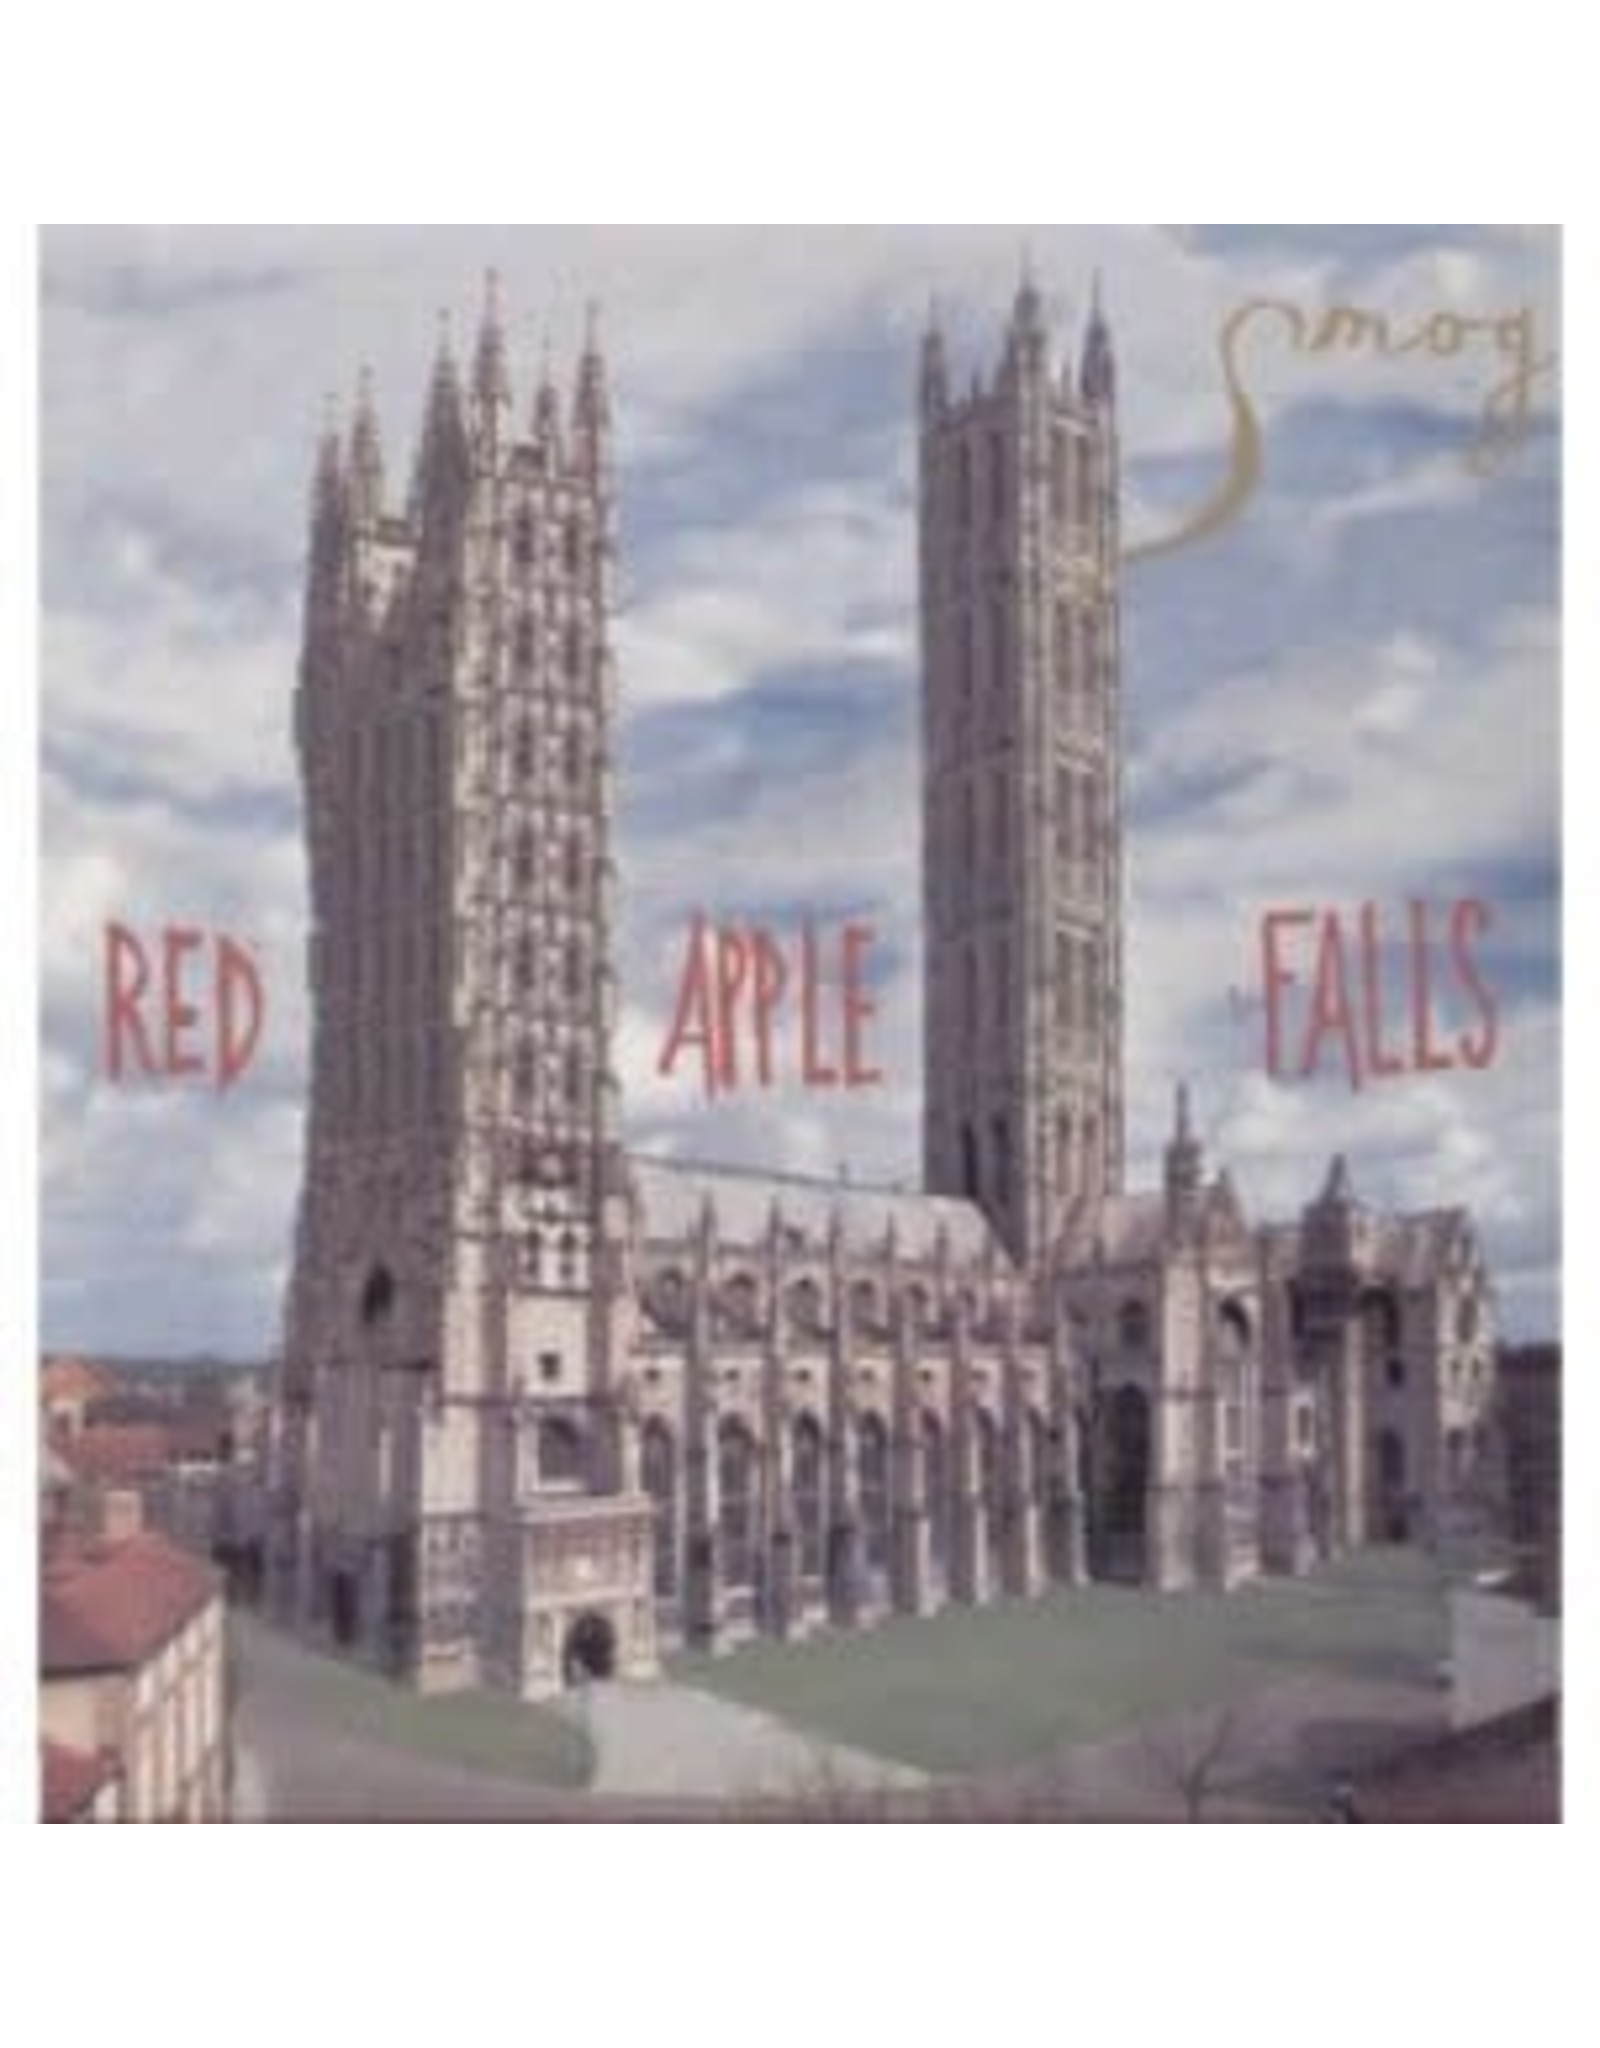 Drag City Smog: Red Apple Falls LP